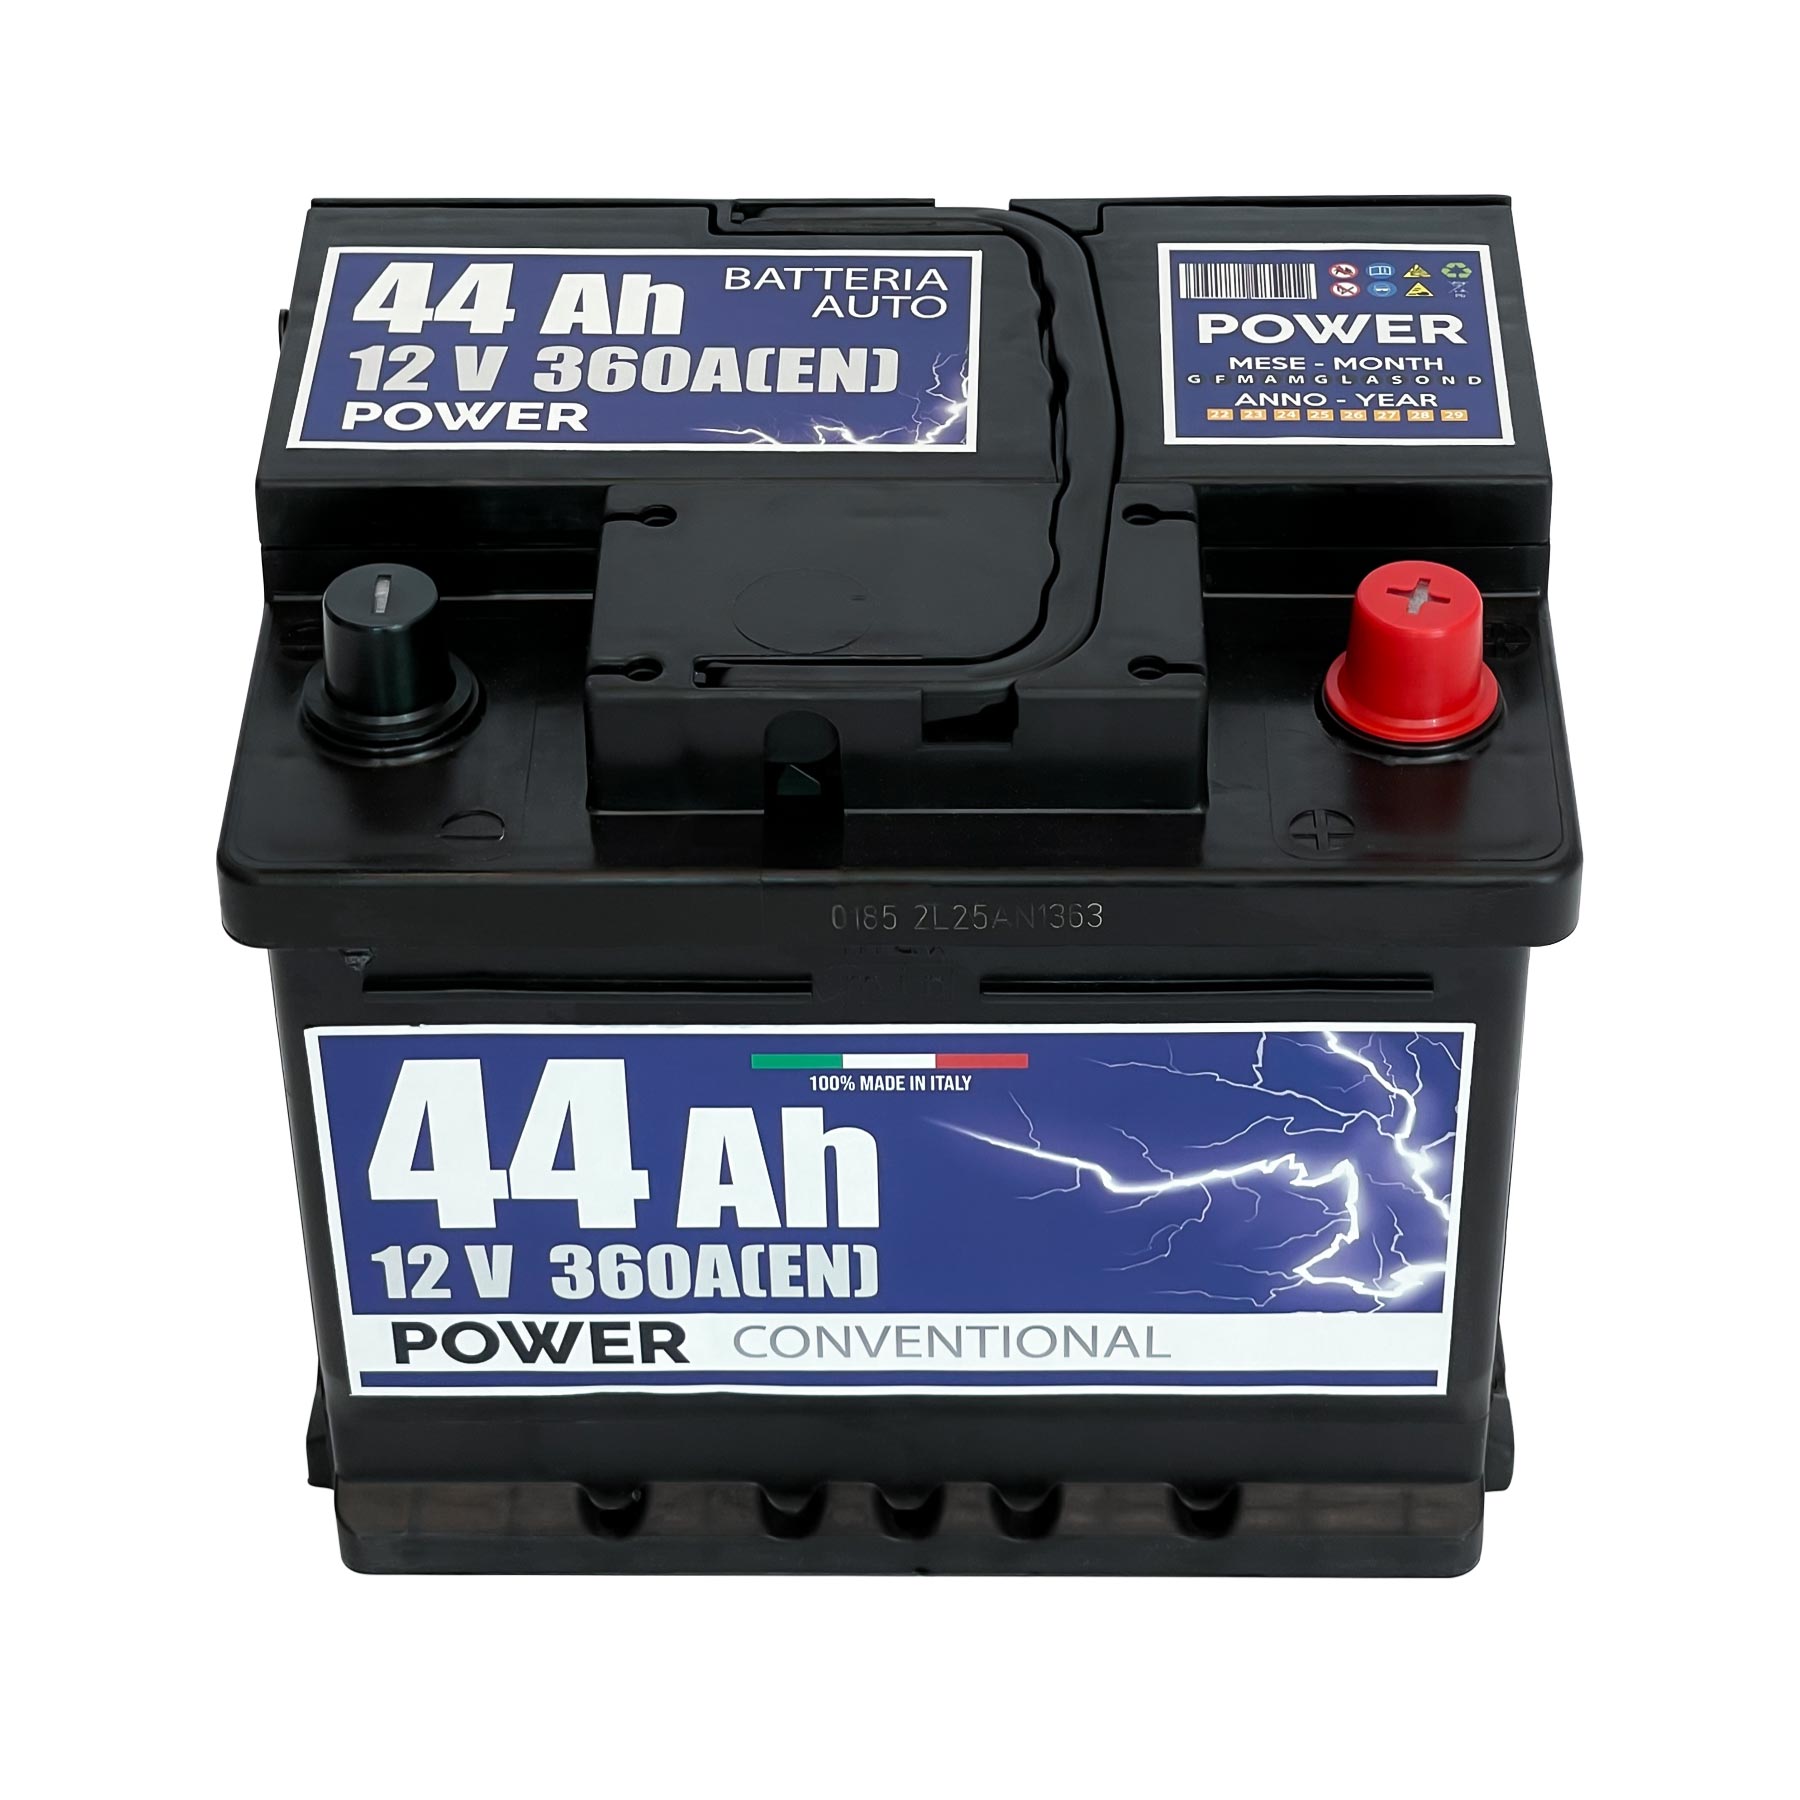 Batteria Power PB442 Conventional